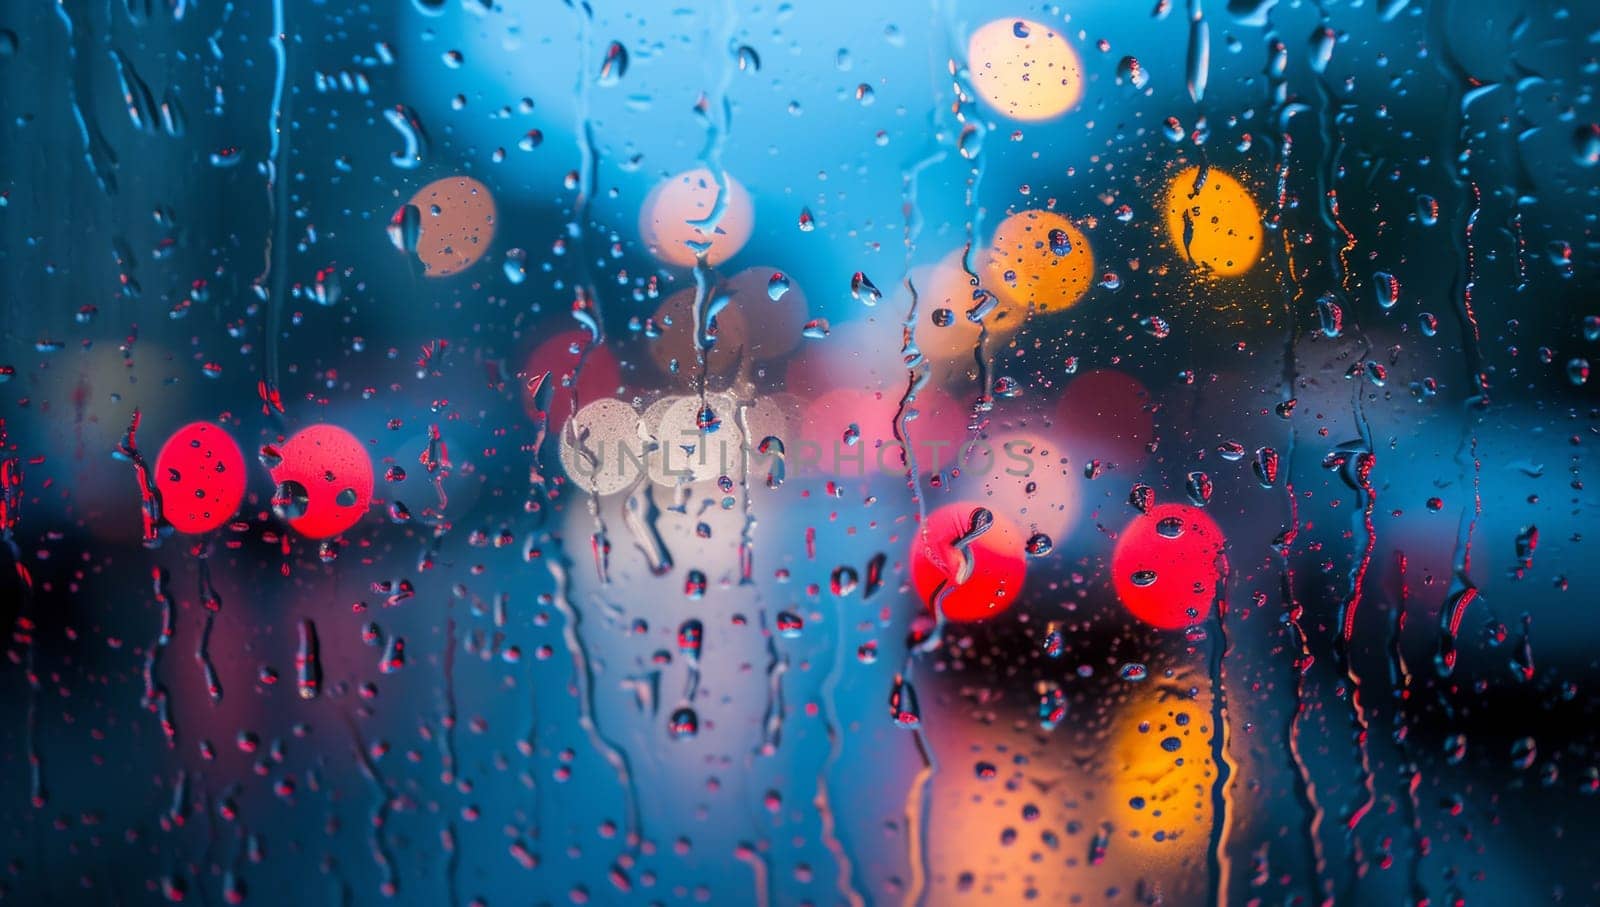 Raindrops on window with city lights bokeh by ailike